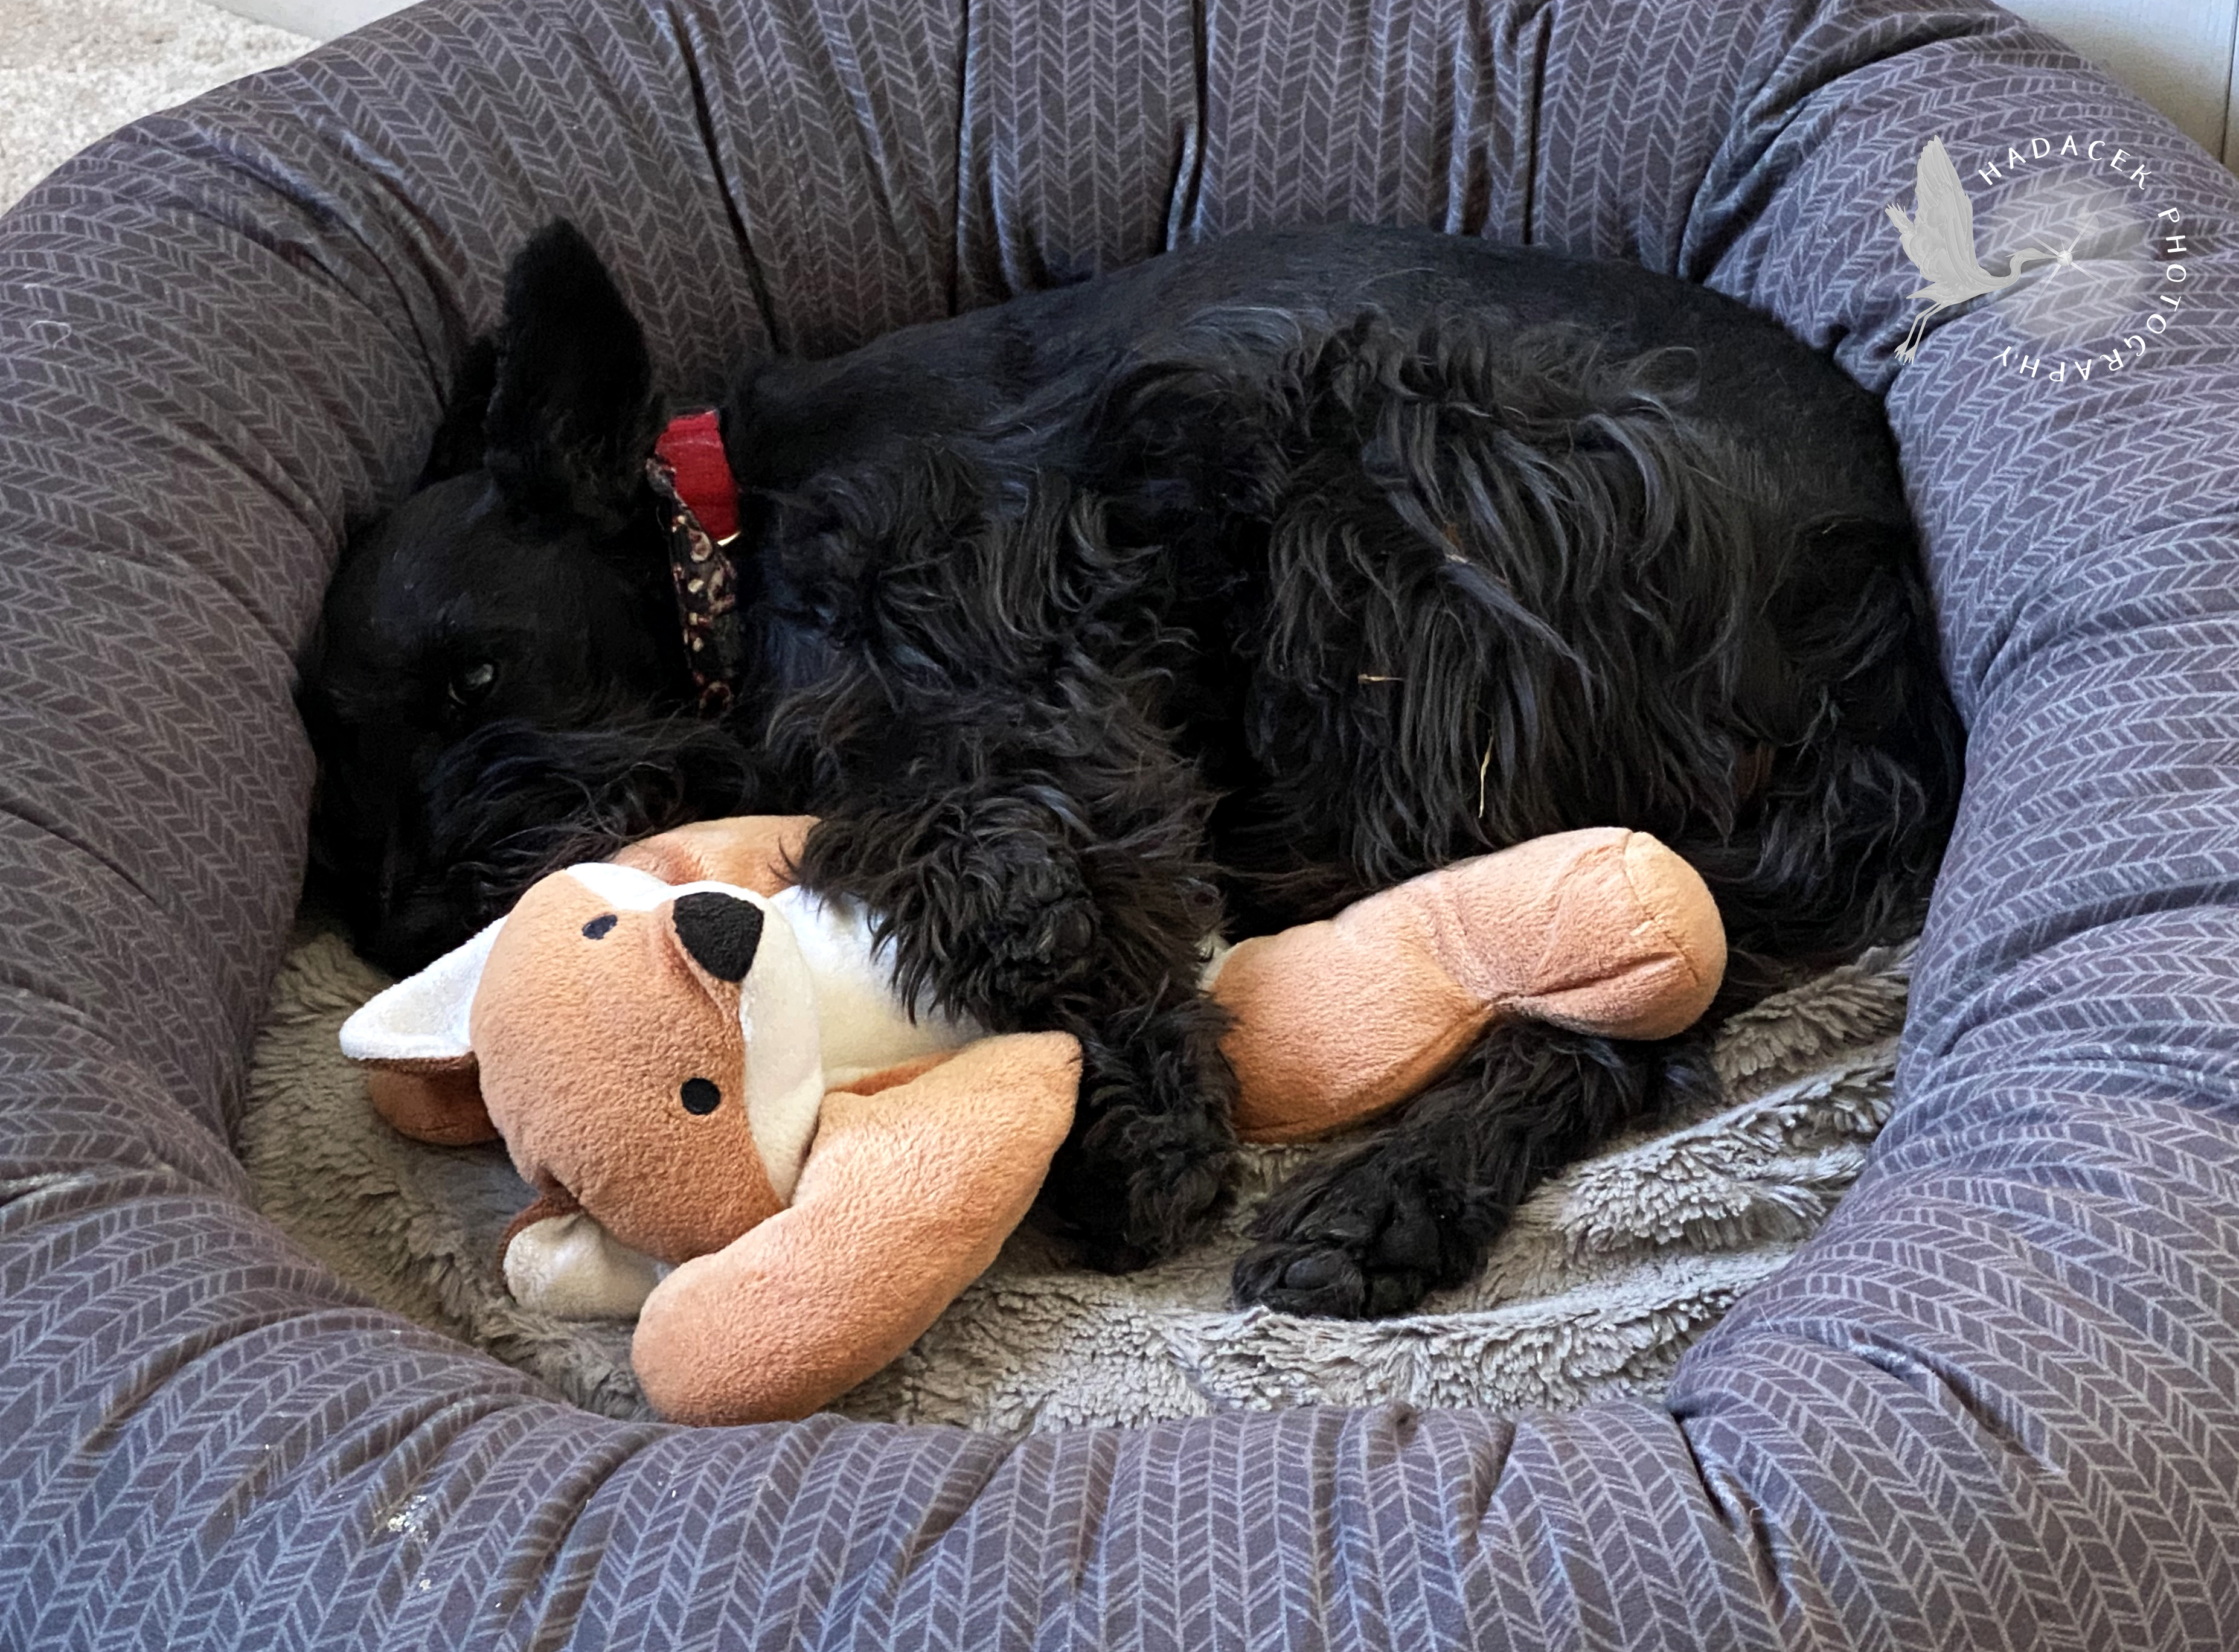 black dog snuggling toy